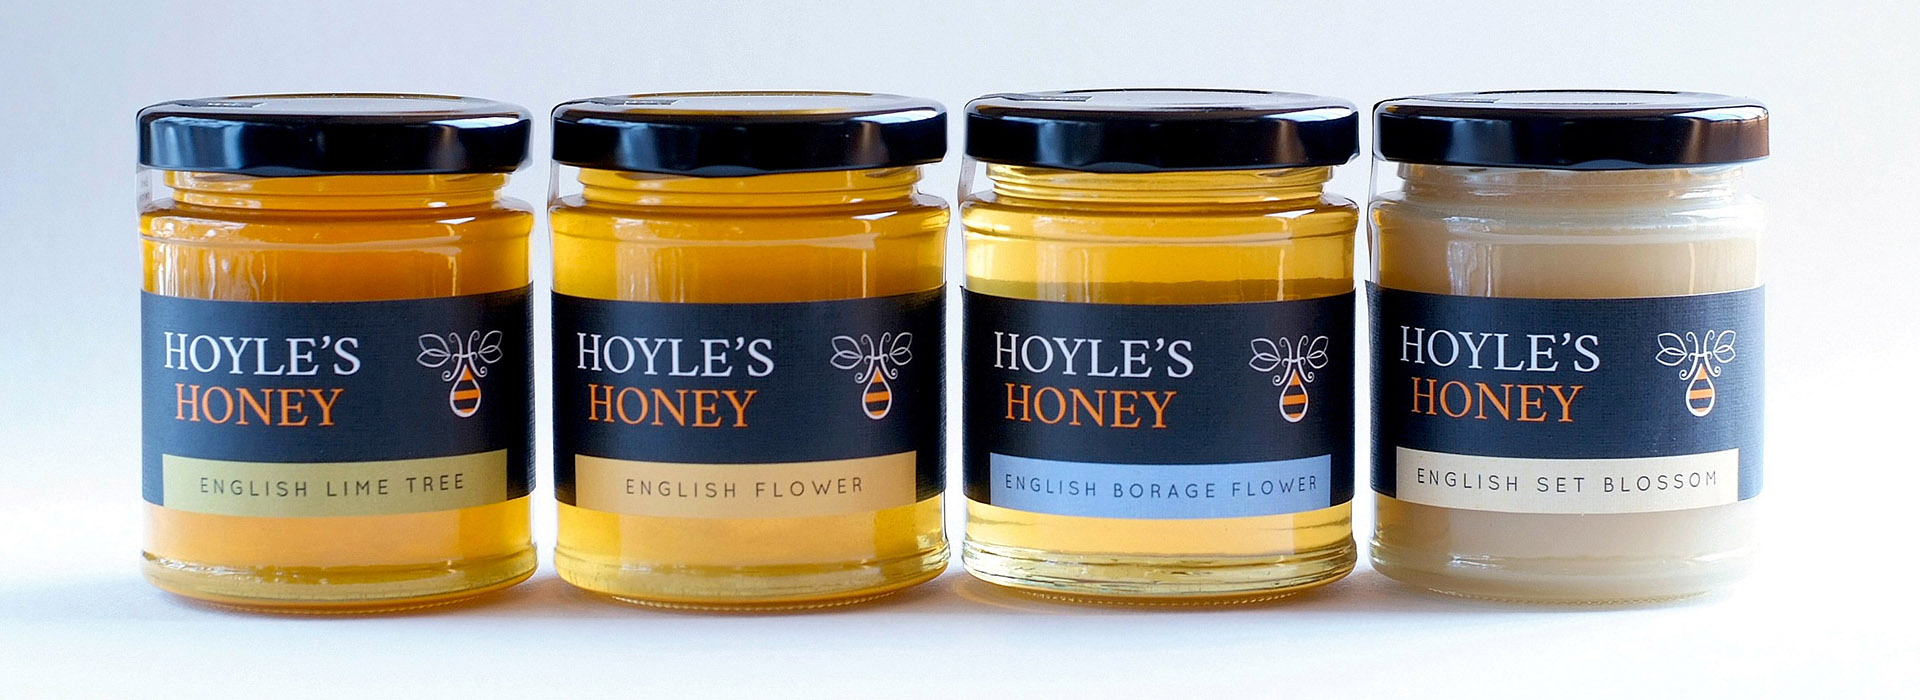 Hoyle's Honey